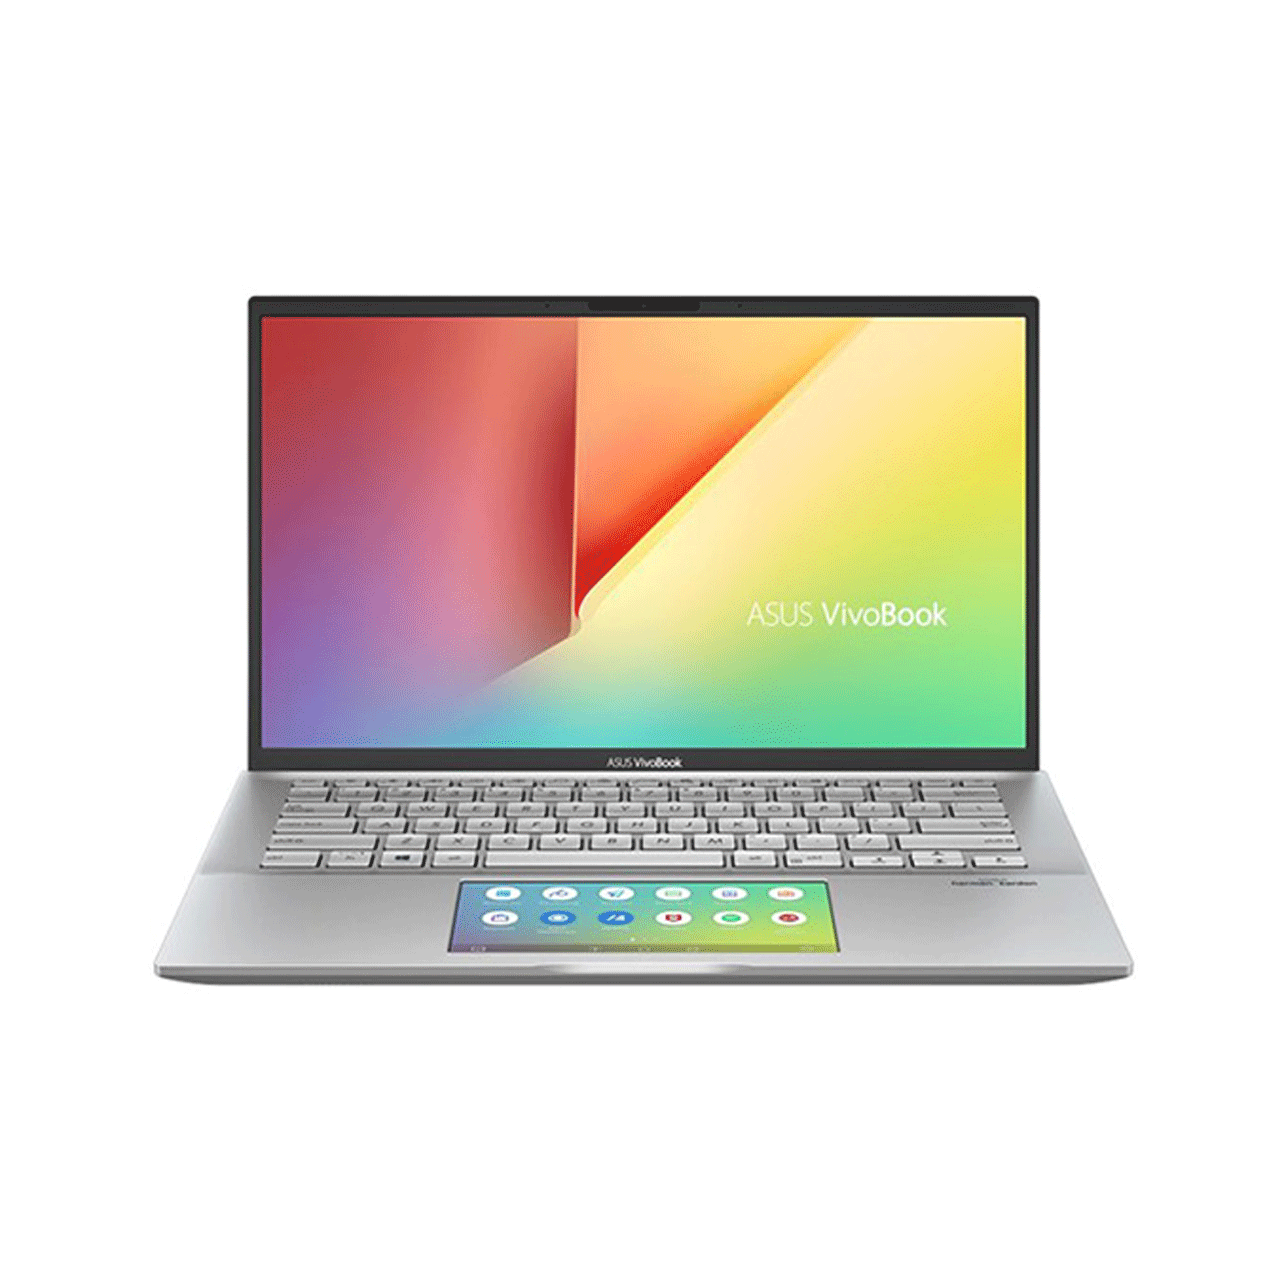 ASUS--VivoBook-S532EQ---B-15-inch-Laptop